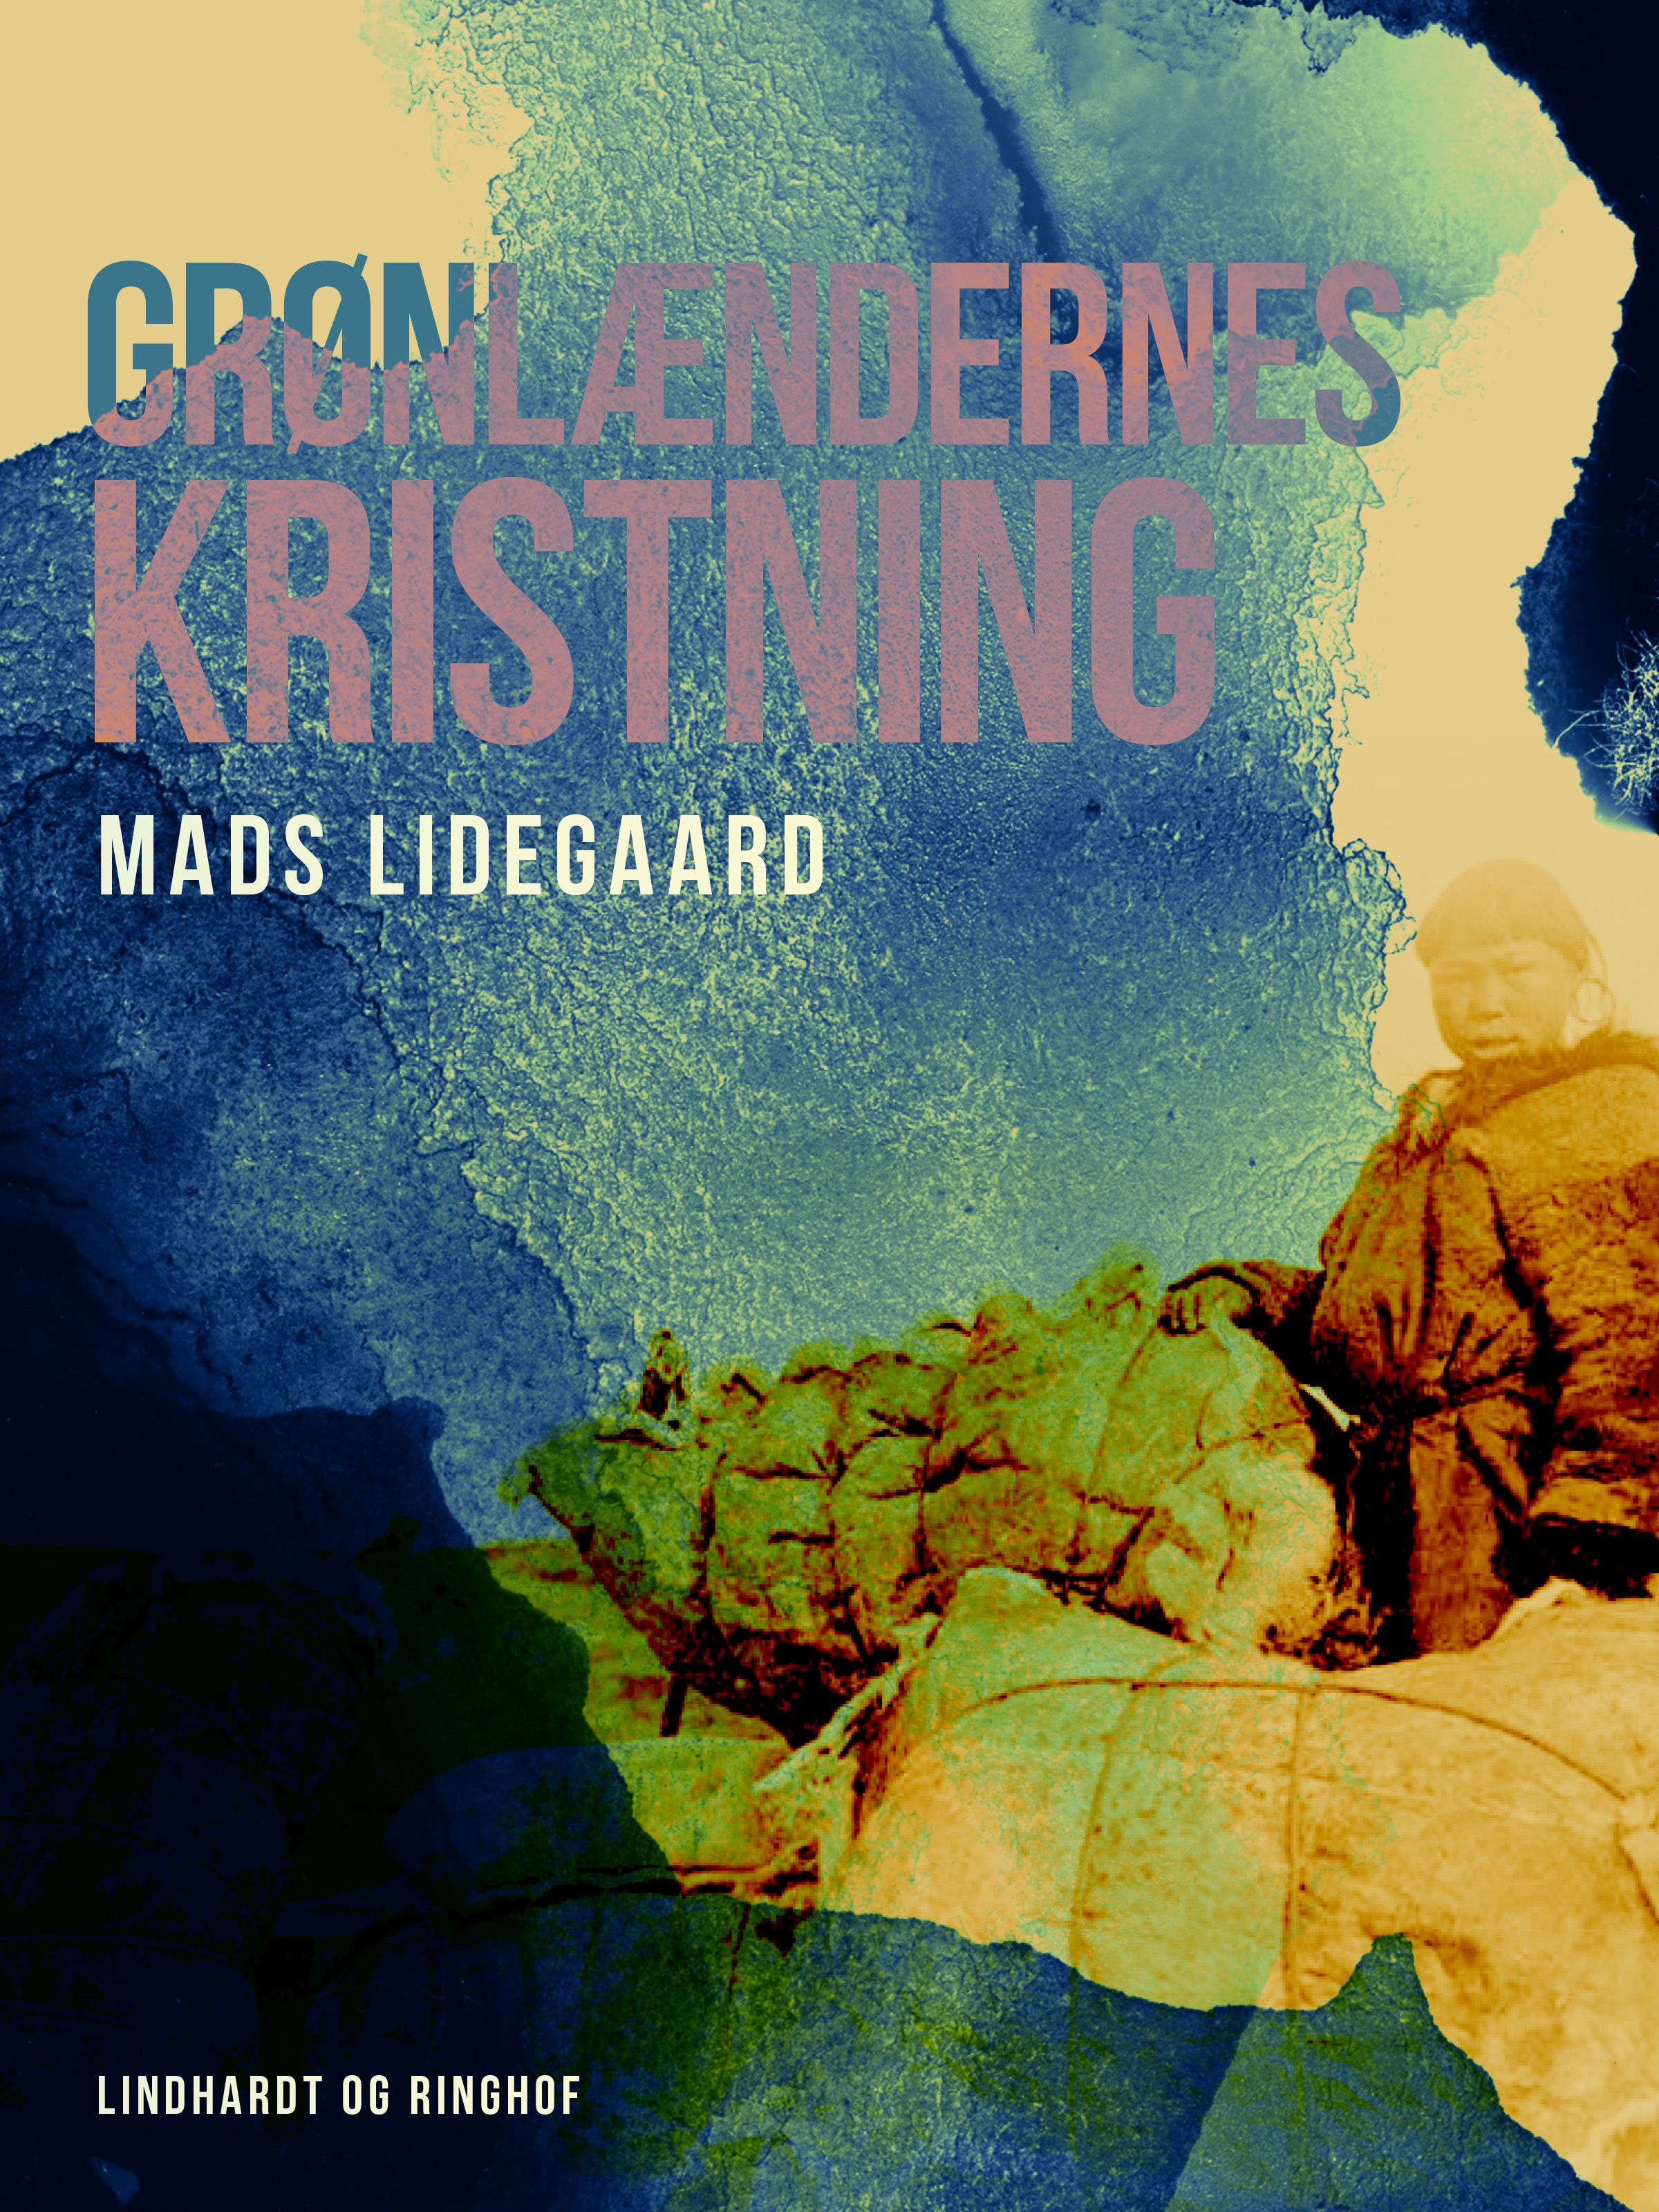 Grønlændernes kristning, e-bok av Mads Lidegaard